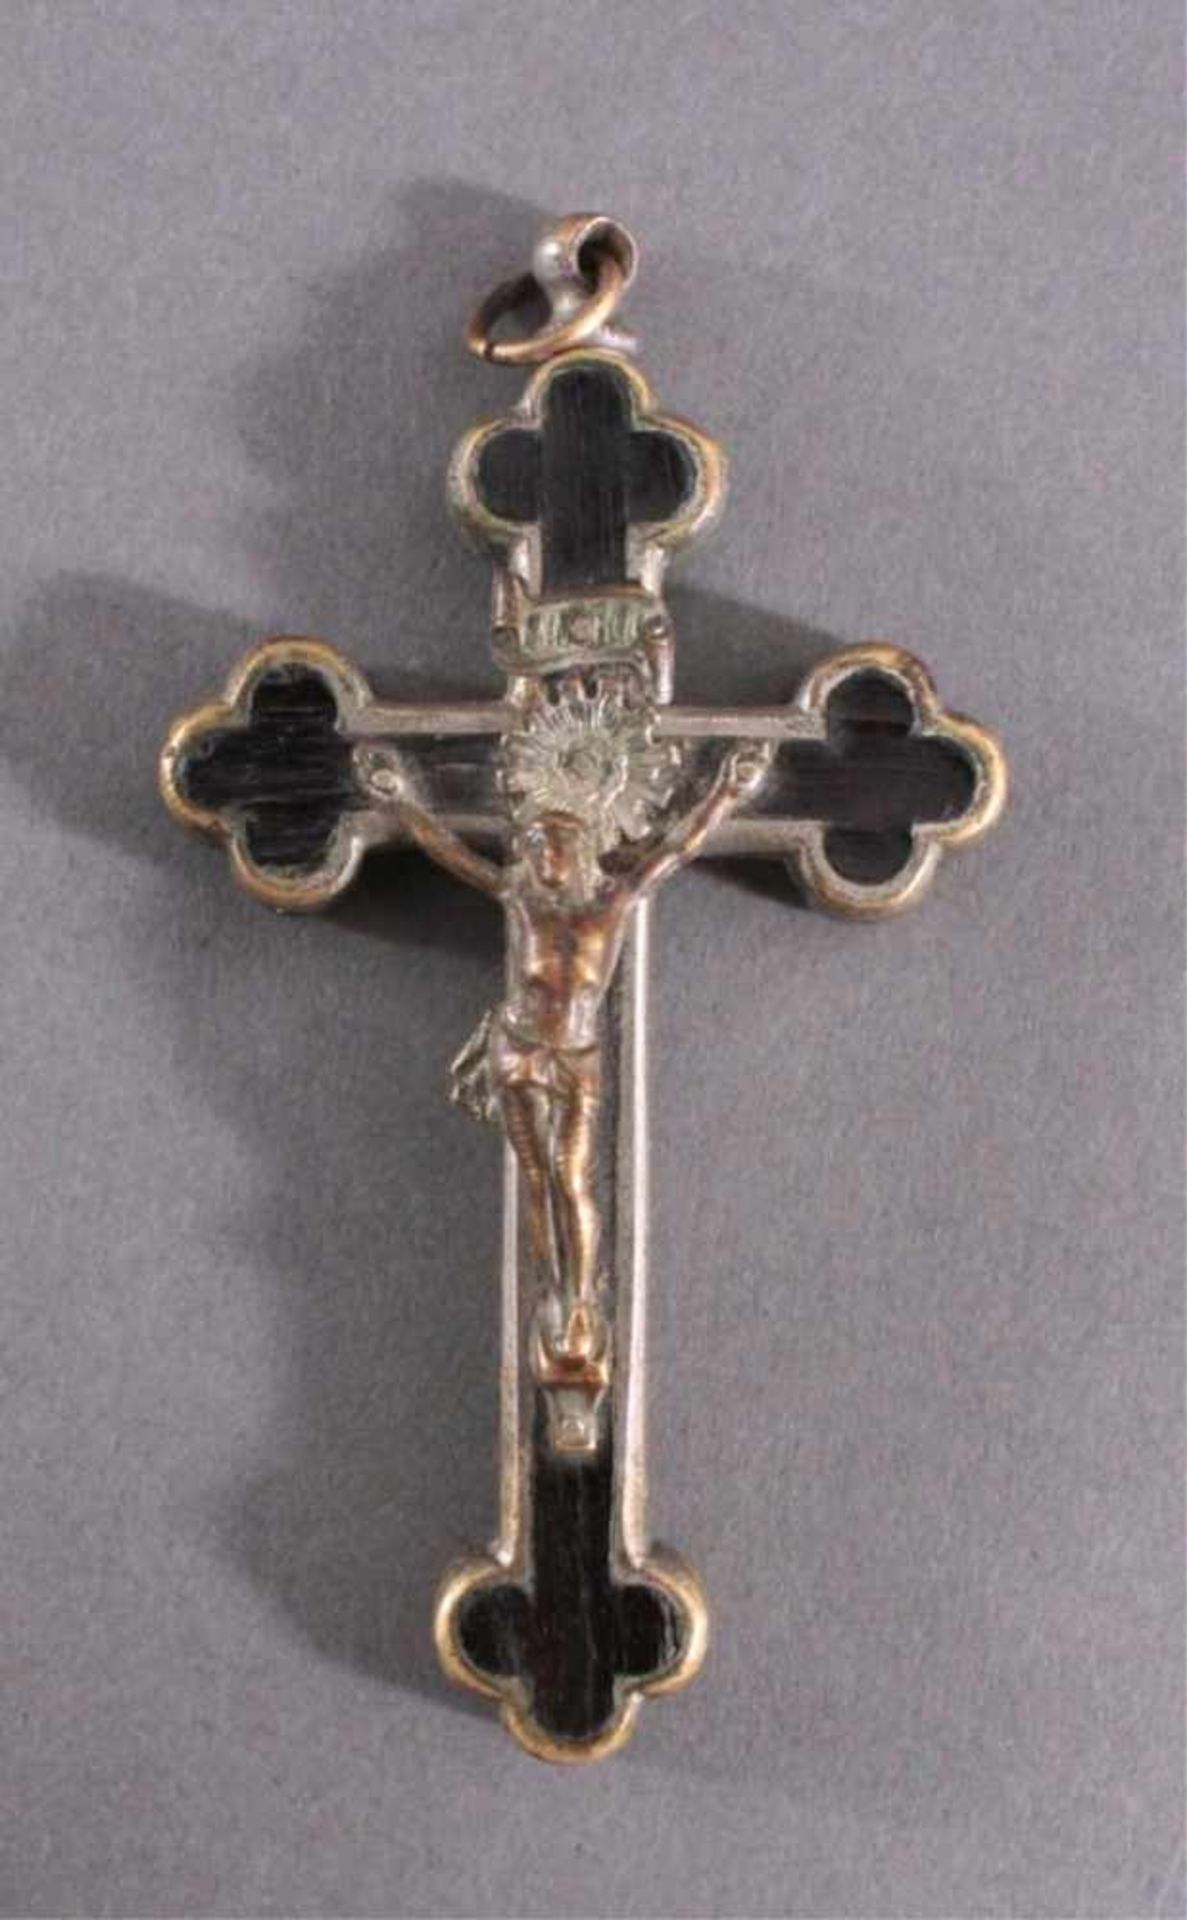 Klosterarbeit - Reliquienkreuz, 19. JahrhundertMessing. Zum Öffnen als Reliquienkreuze, darin - Bild 3 aus 4